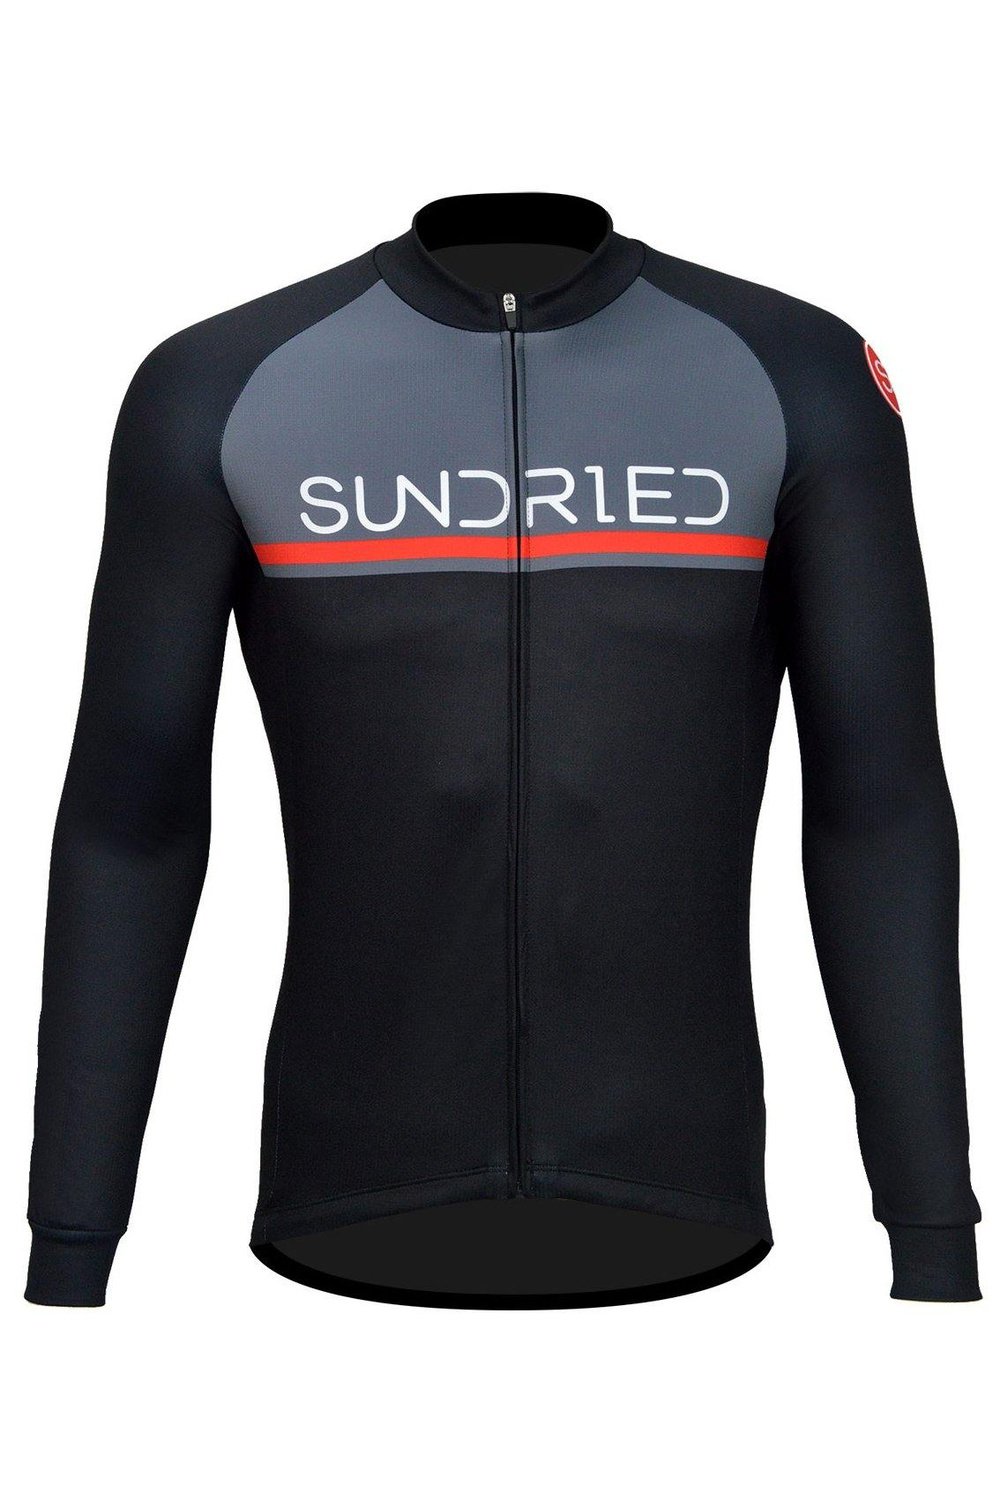 Sundried Peloton Men's Long Sleeve Cycle Jersey Long Sleeve Jersey XS Black SD0109 XS Black Activewear